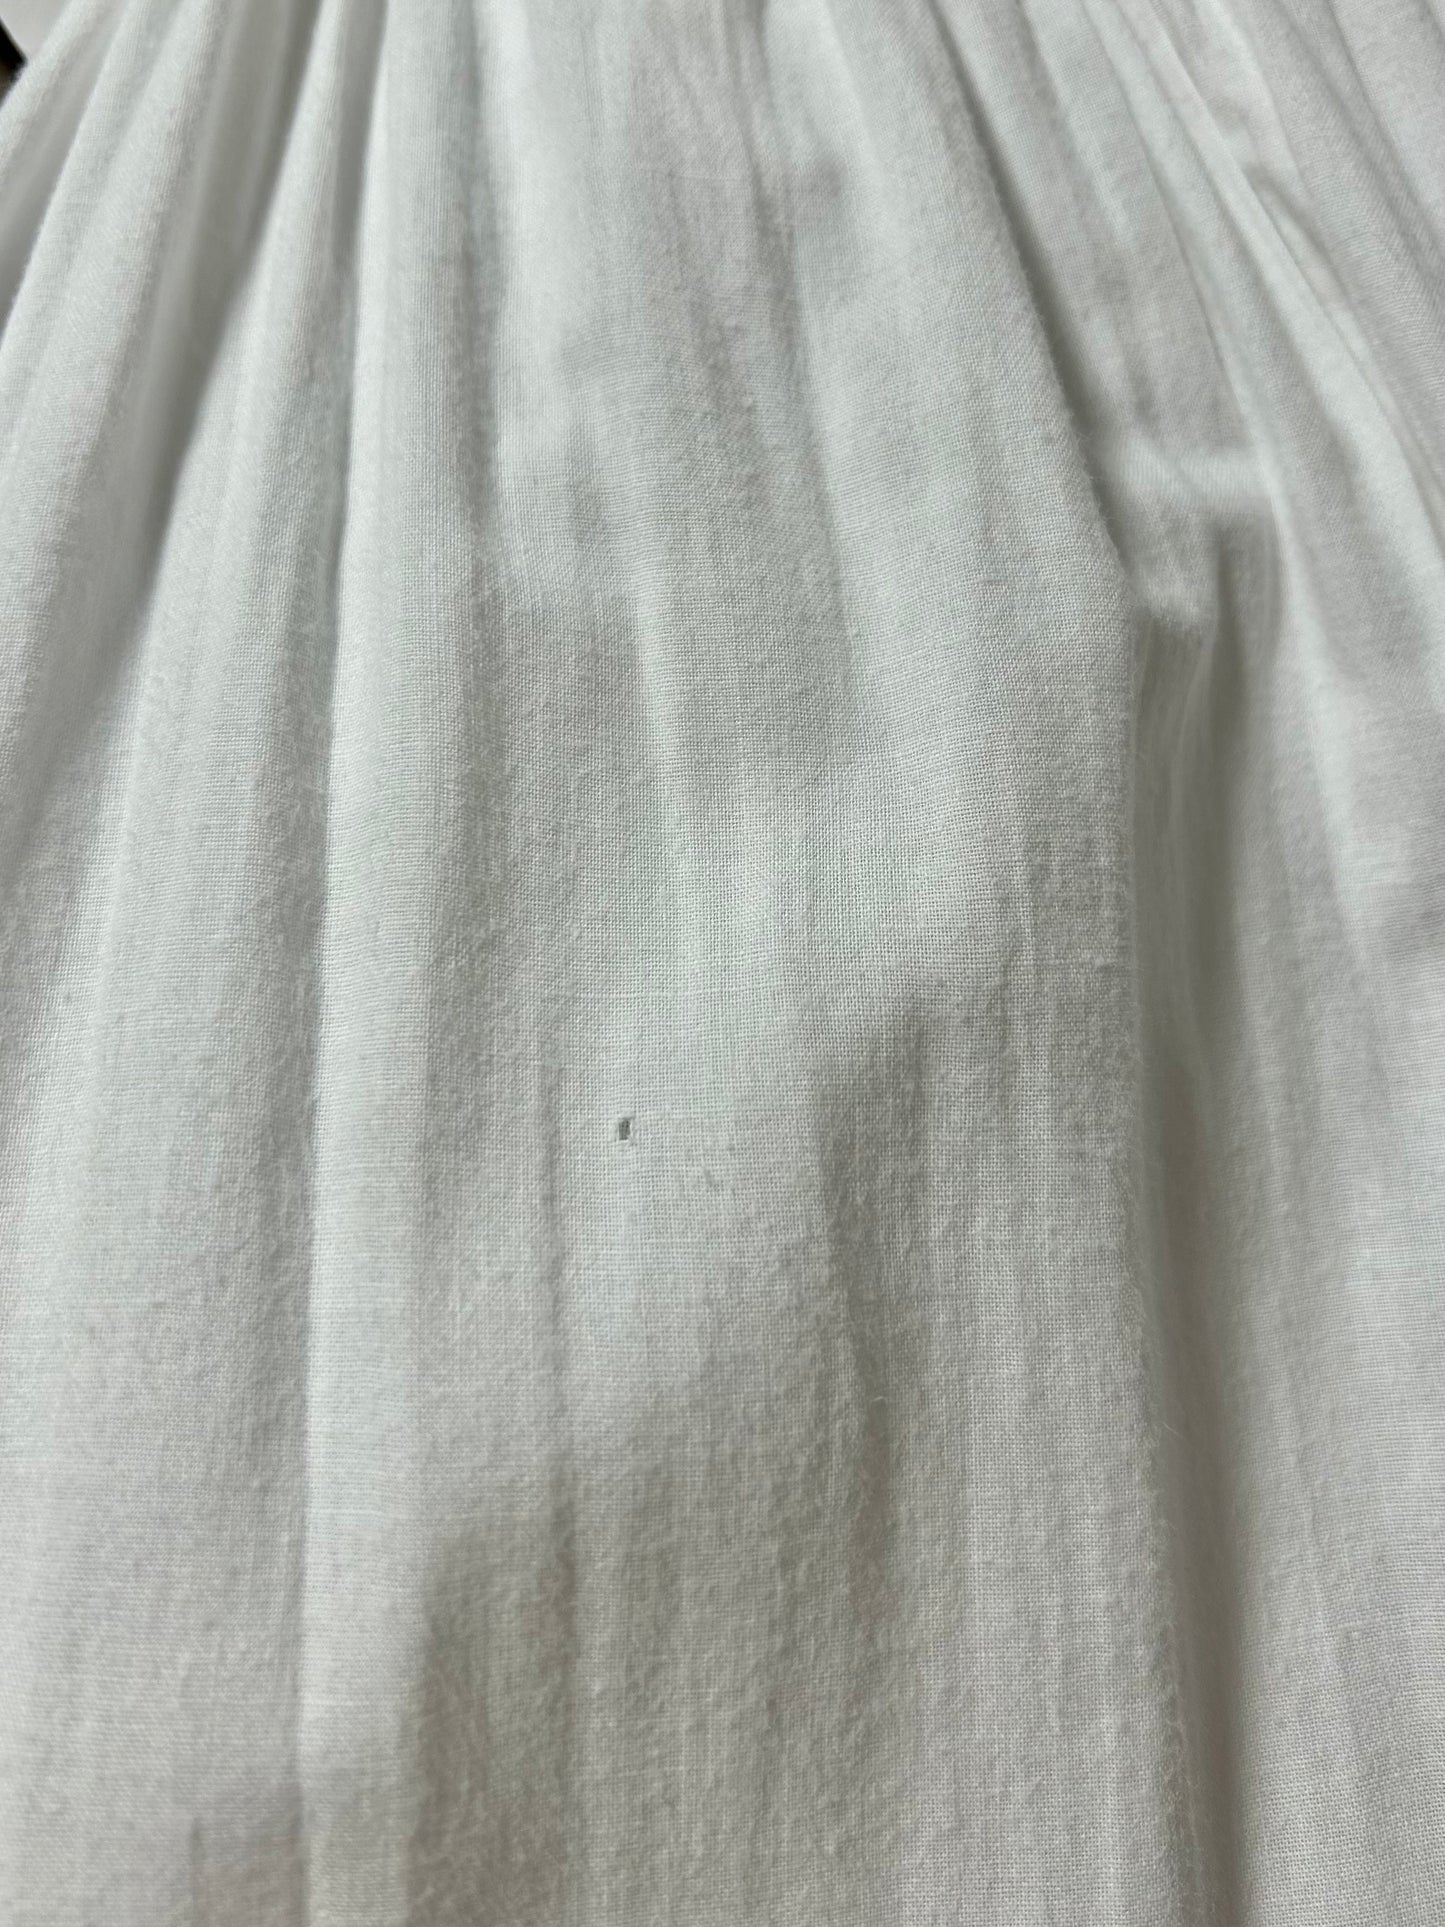 Vintage Petti Skirt [D26898]